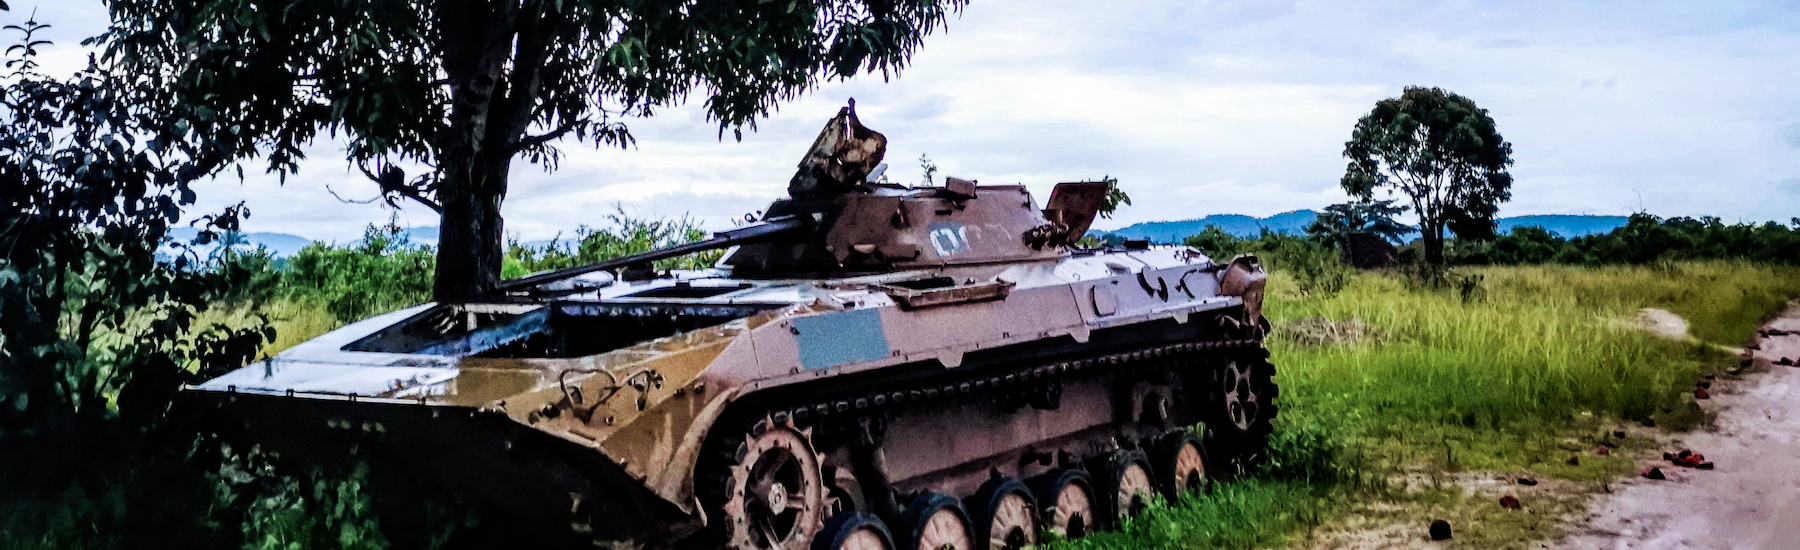 Angola_military_hardware_civil_war_wreckage